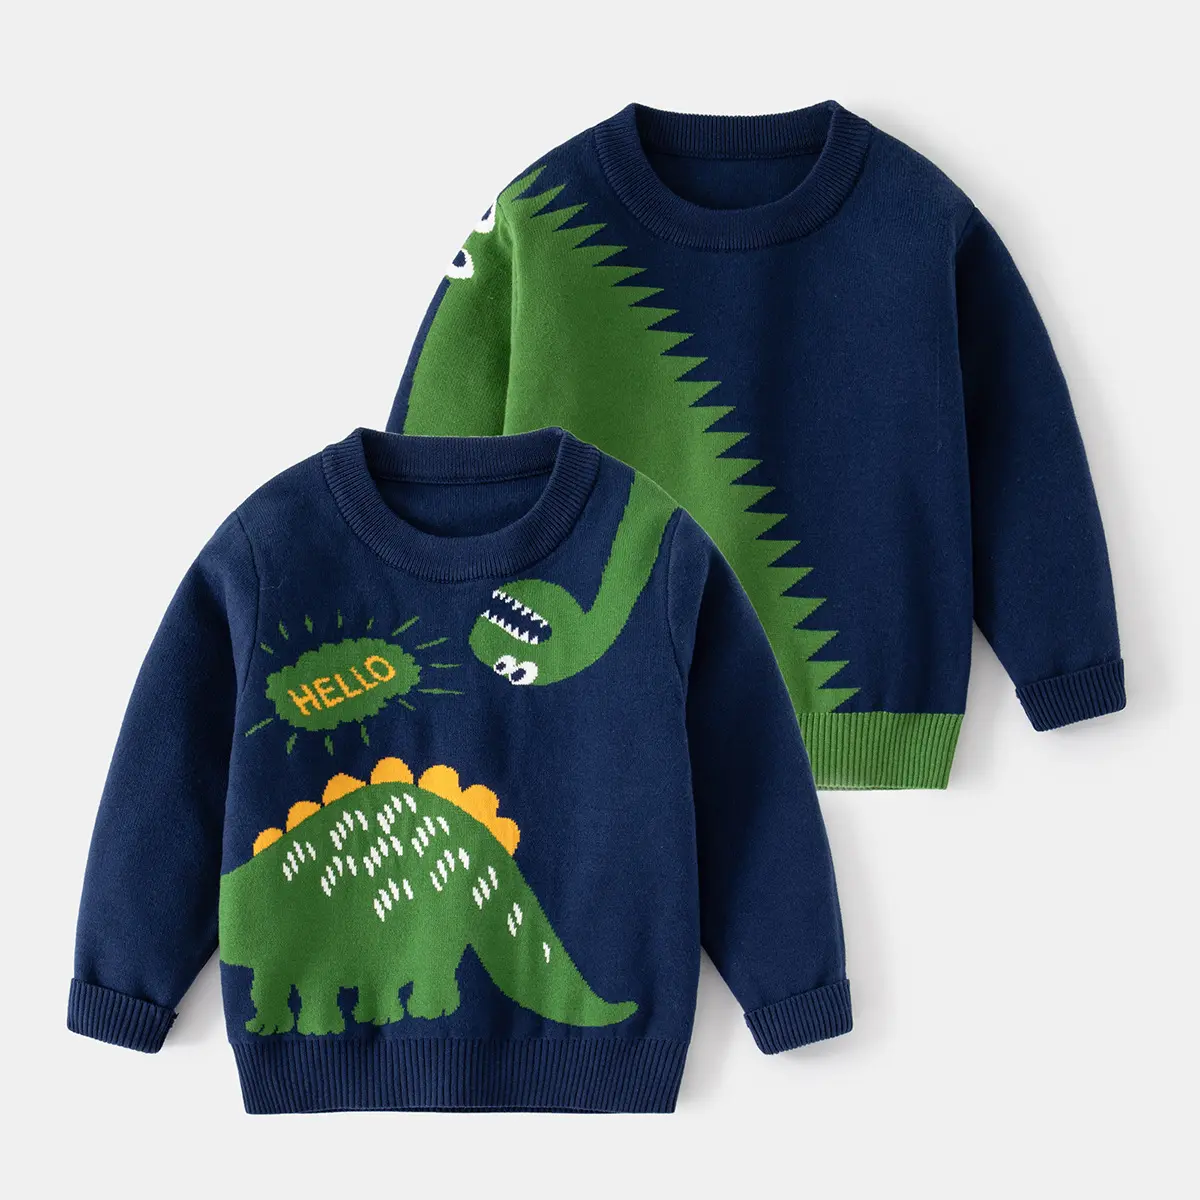 In stock Autumn Winter Kids Warm Cotton Soft Pullovers Long Sleeve Cartoon Dinosaur Boys Sweaters